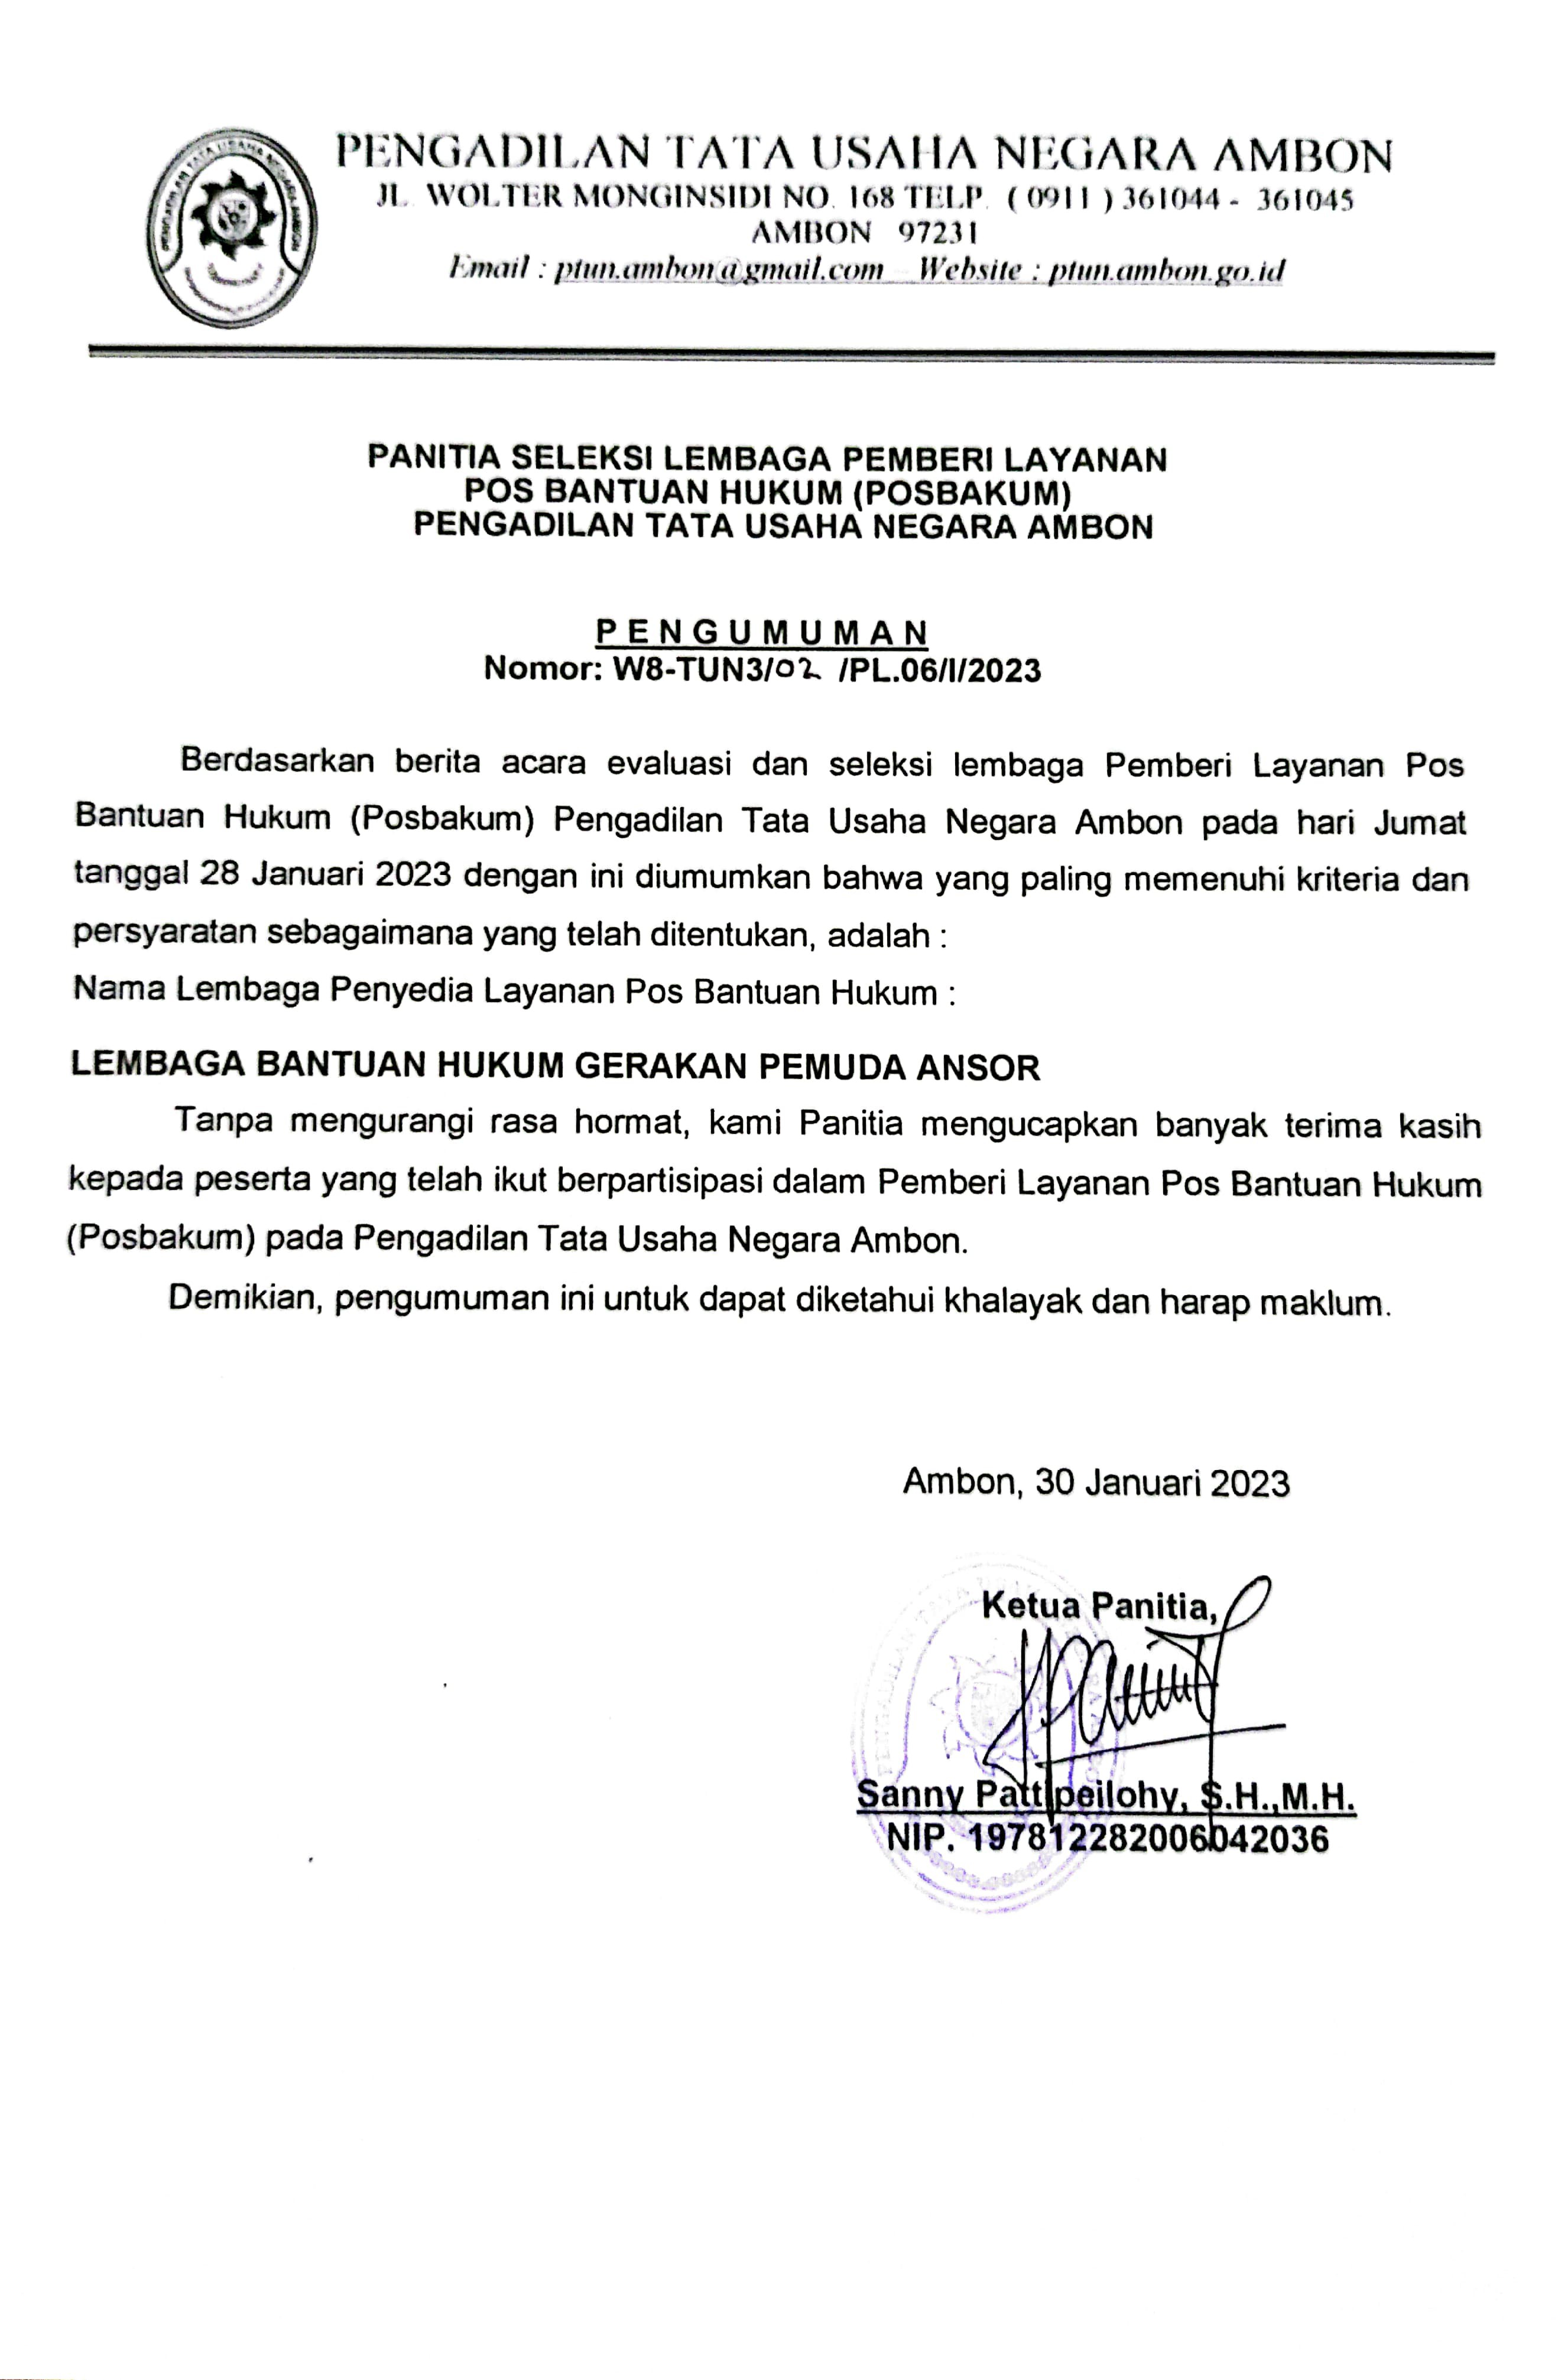 Pengumuman Panitia Seleksi Posbakum PTUN Ambon 2023